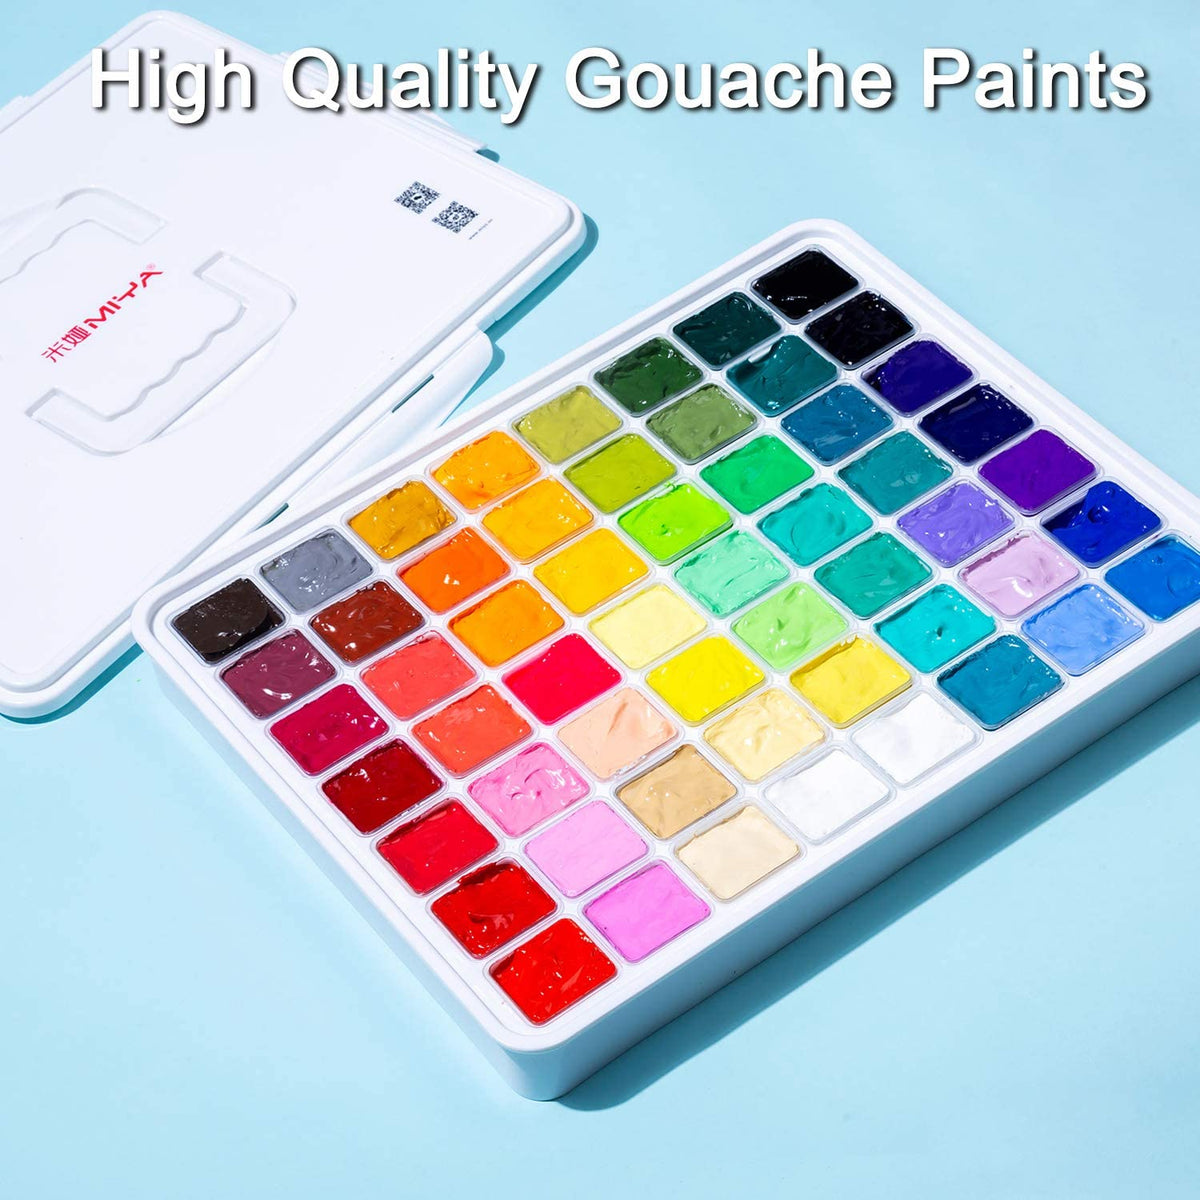 Himi Gouache Paint Set Jelly Cup 18 Vibrant Colors Non Toxic Paints with Portable Case Palette for Artist Canvas Painting Watercolor Papers Rich